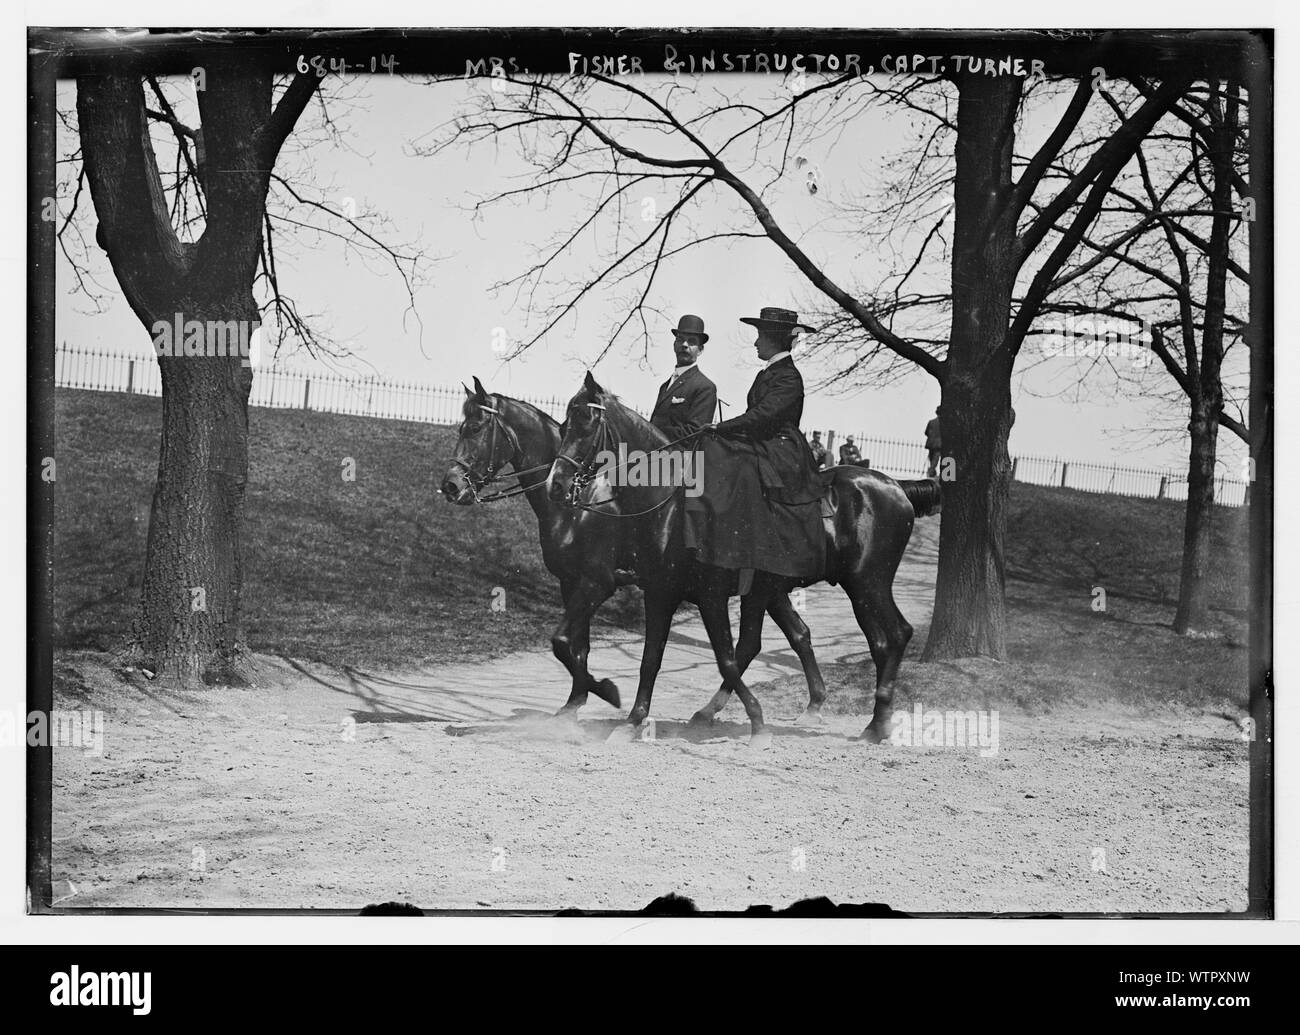 Mrs. Fisher and Capt. Turner, her instructor, horseback riding in park ...